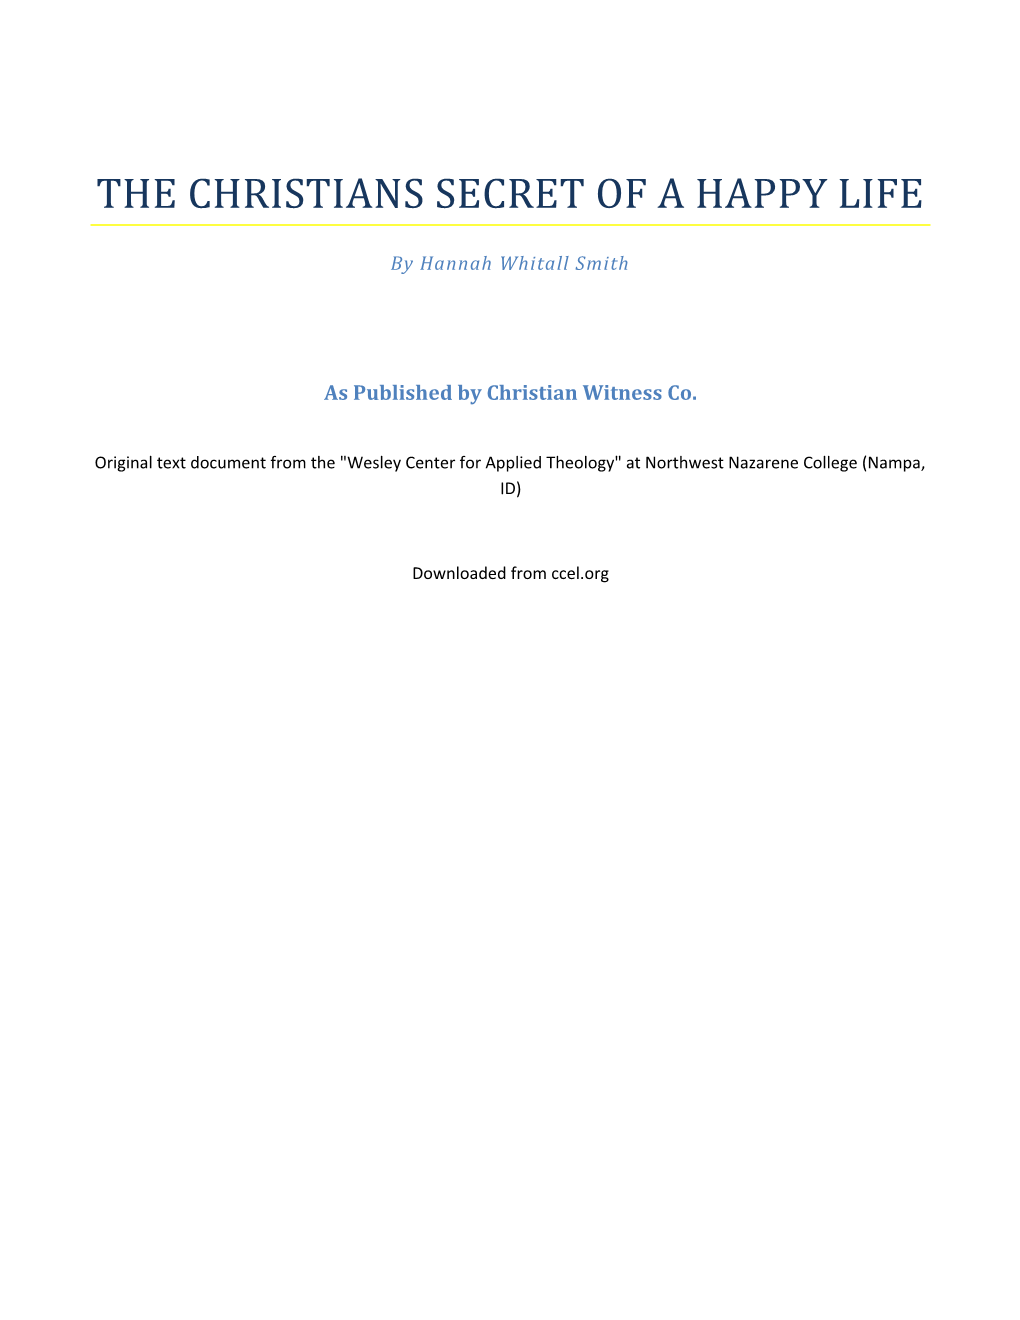 The Christians Secret of a Happy Life